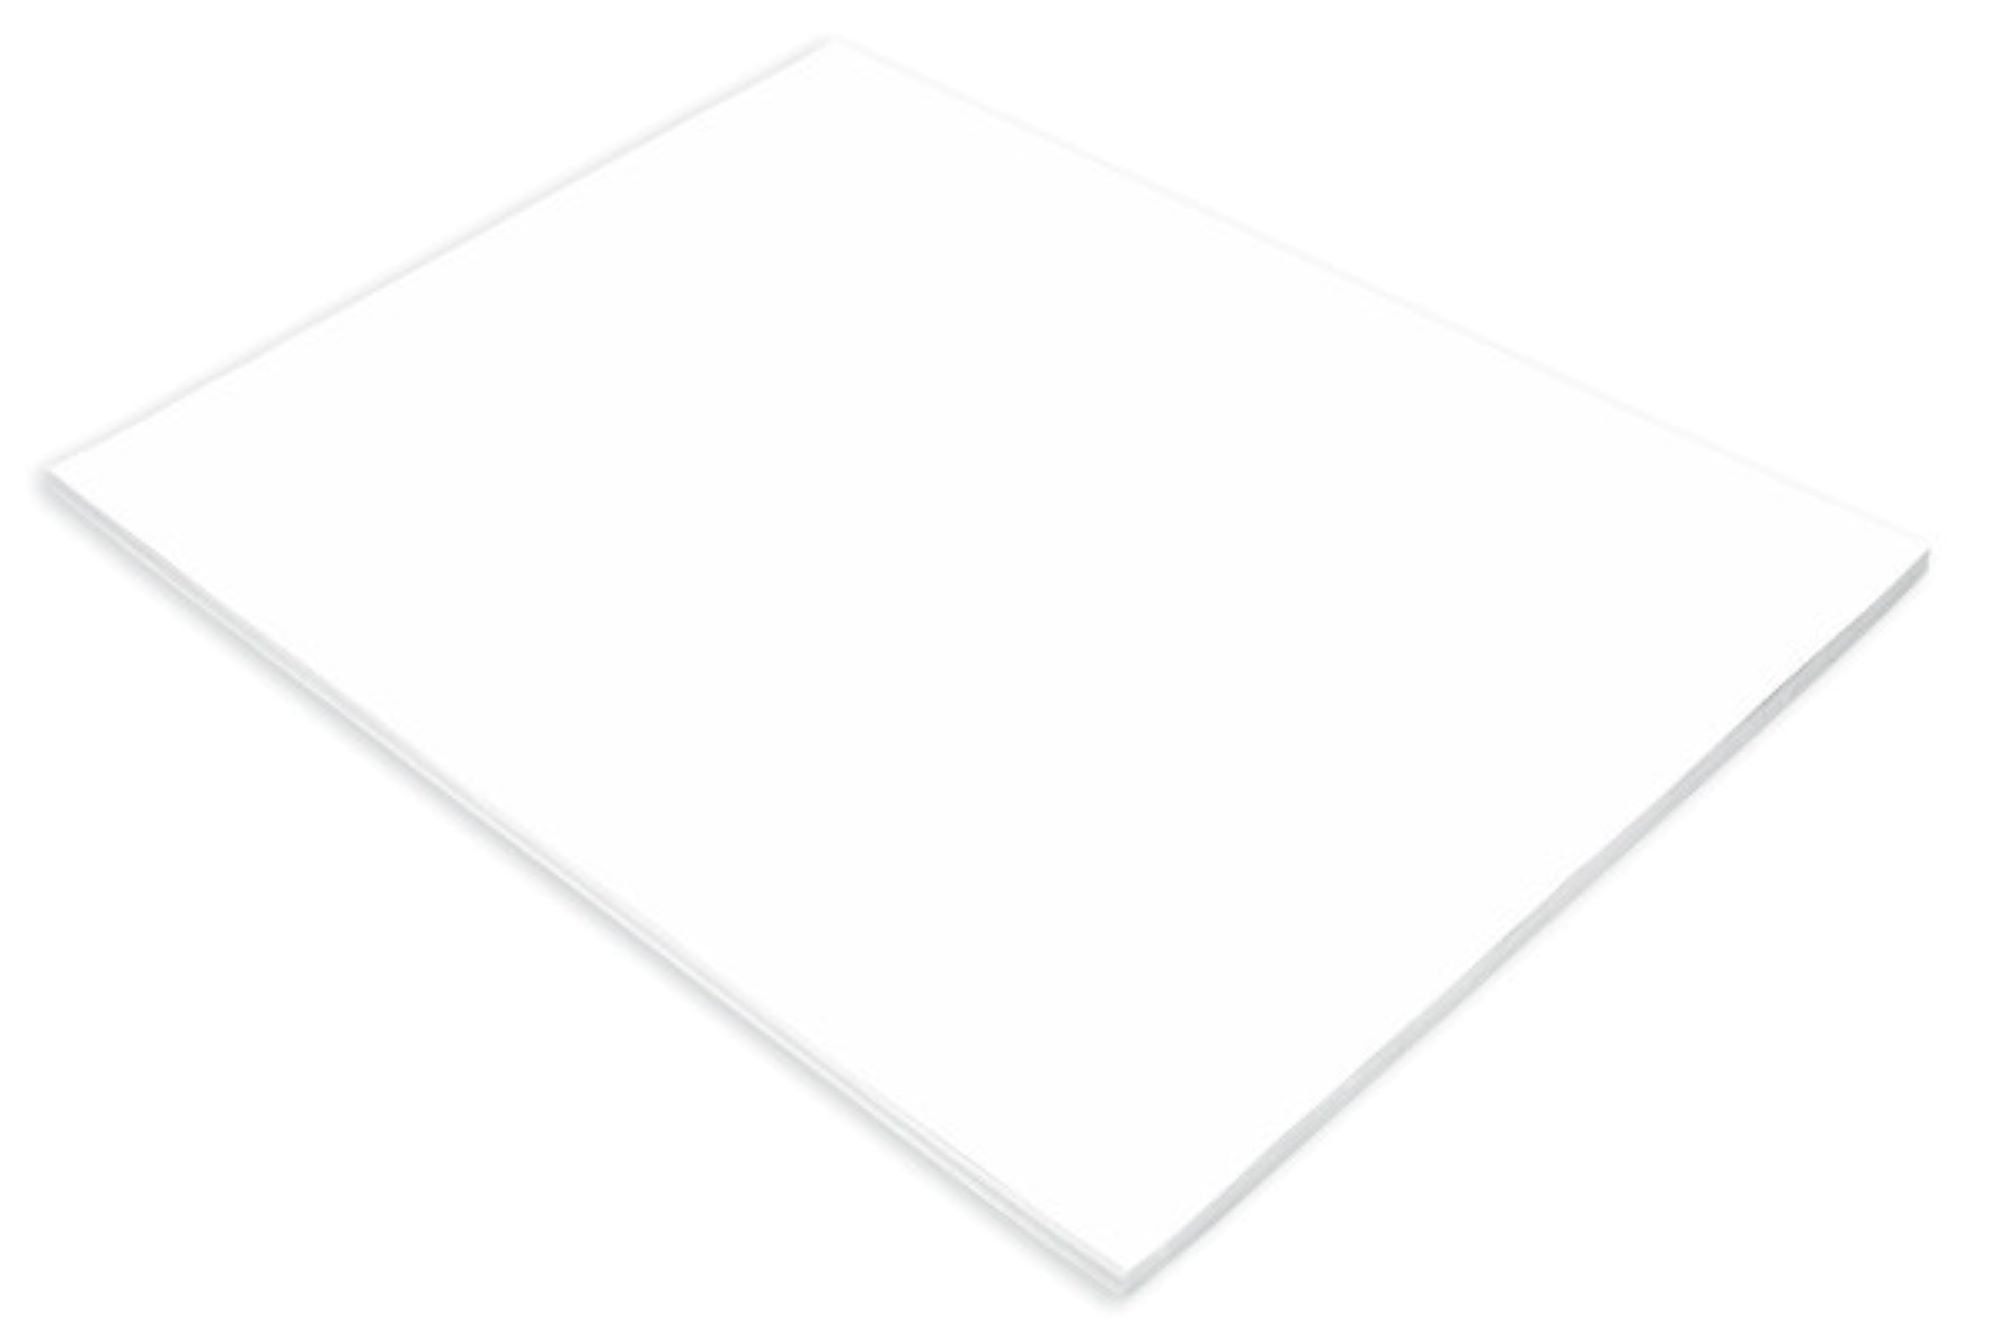 Premium Construction Paper, Black & White, 9 x 12, 144 Sheets - PAC6676, Dixon Ticonderoga Co - Pacon